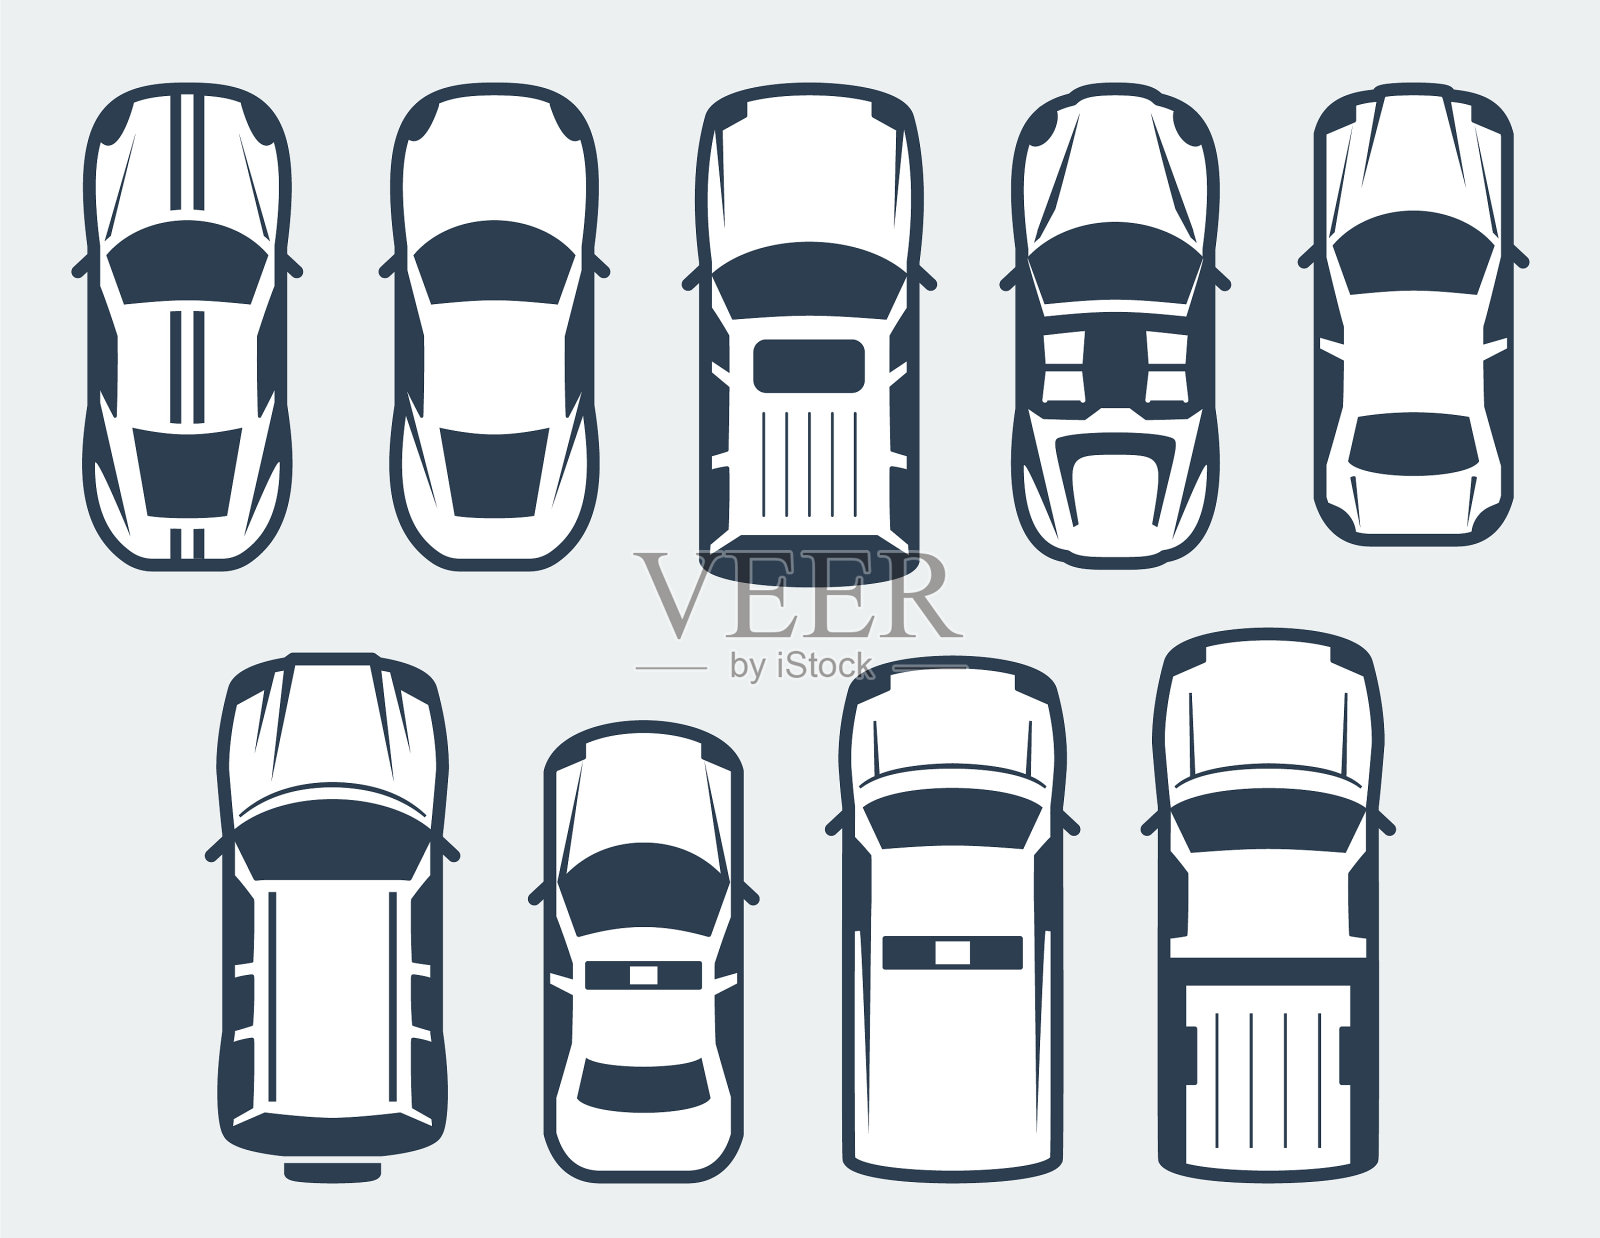 Premium Vector | Cars and trucks top view vector illustration